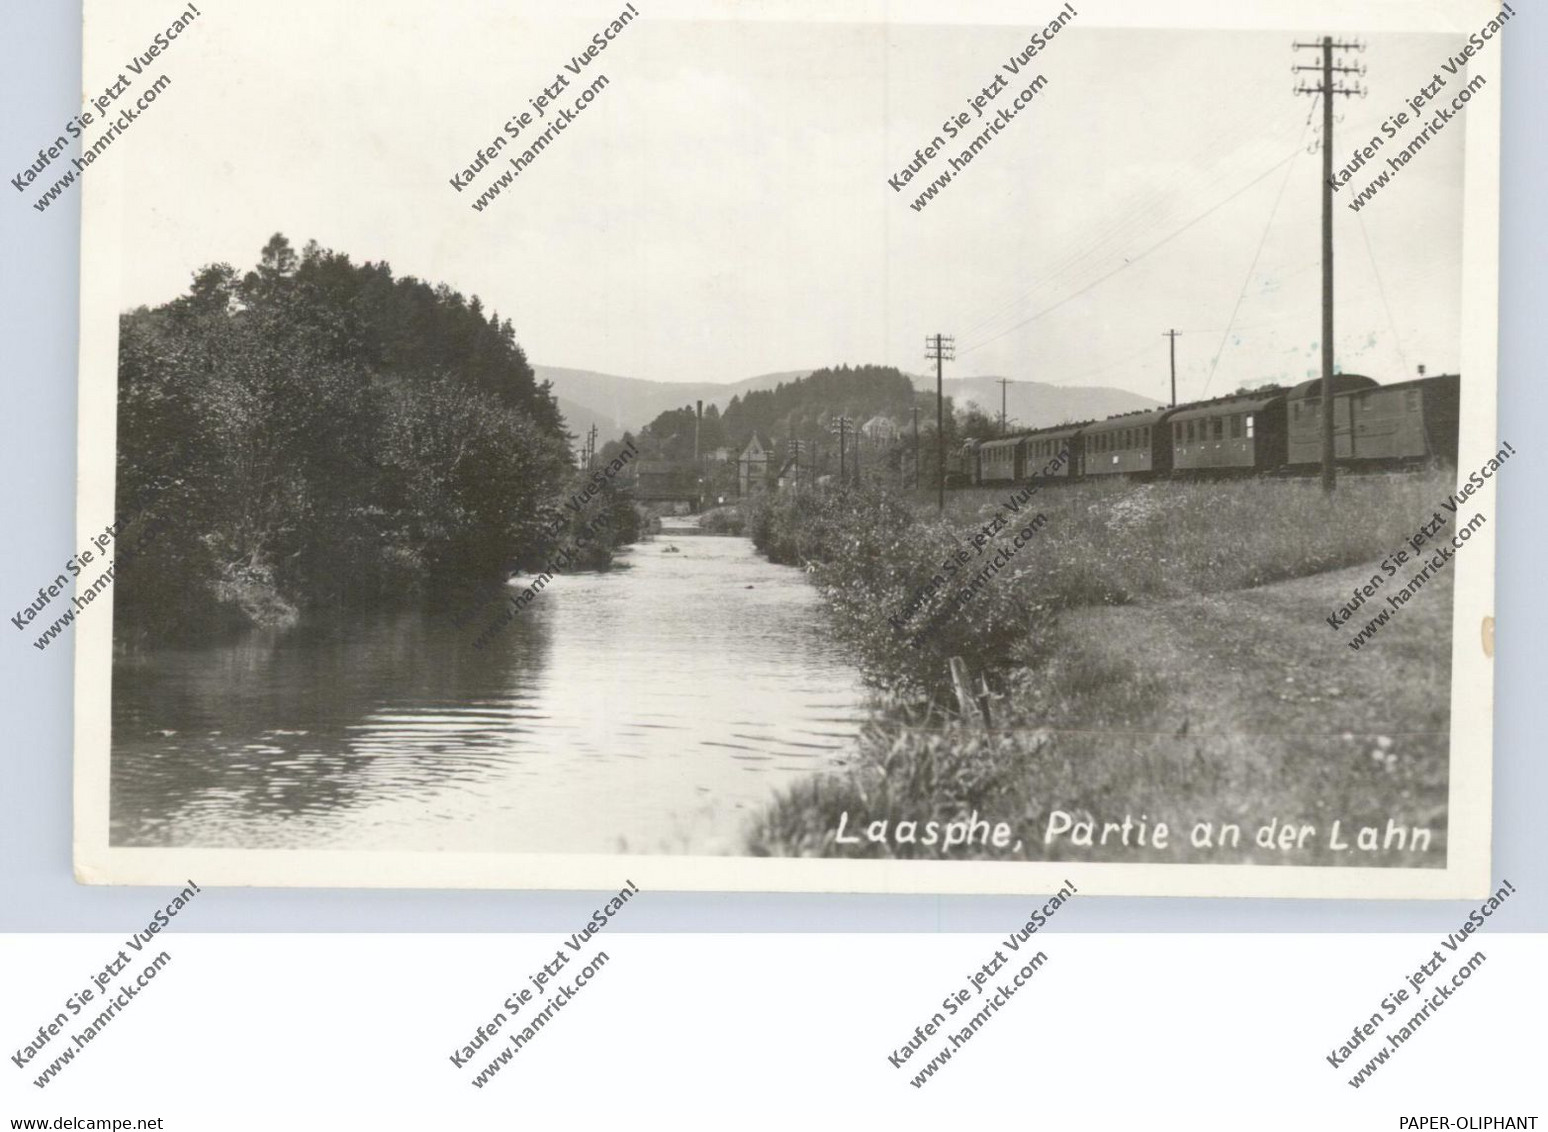 5928 BAD LAASPOHE, Partie An Der Lahn, Eisenbahnlinie, Photo-AK, 1954 - Bad Laasphe